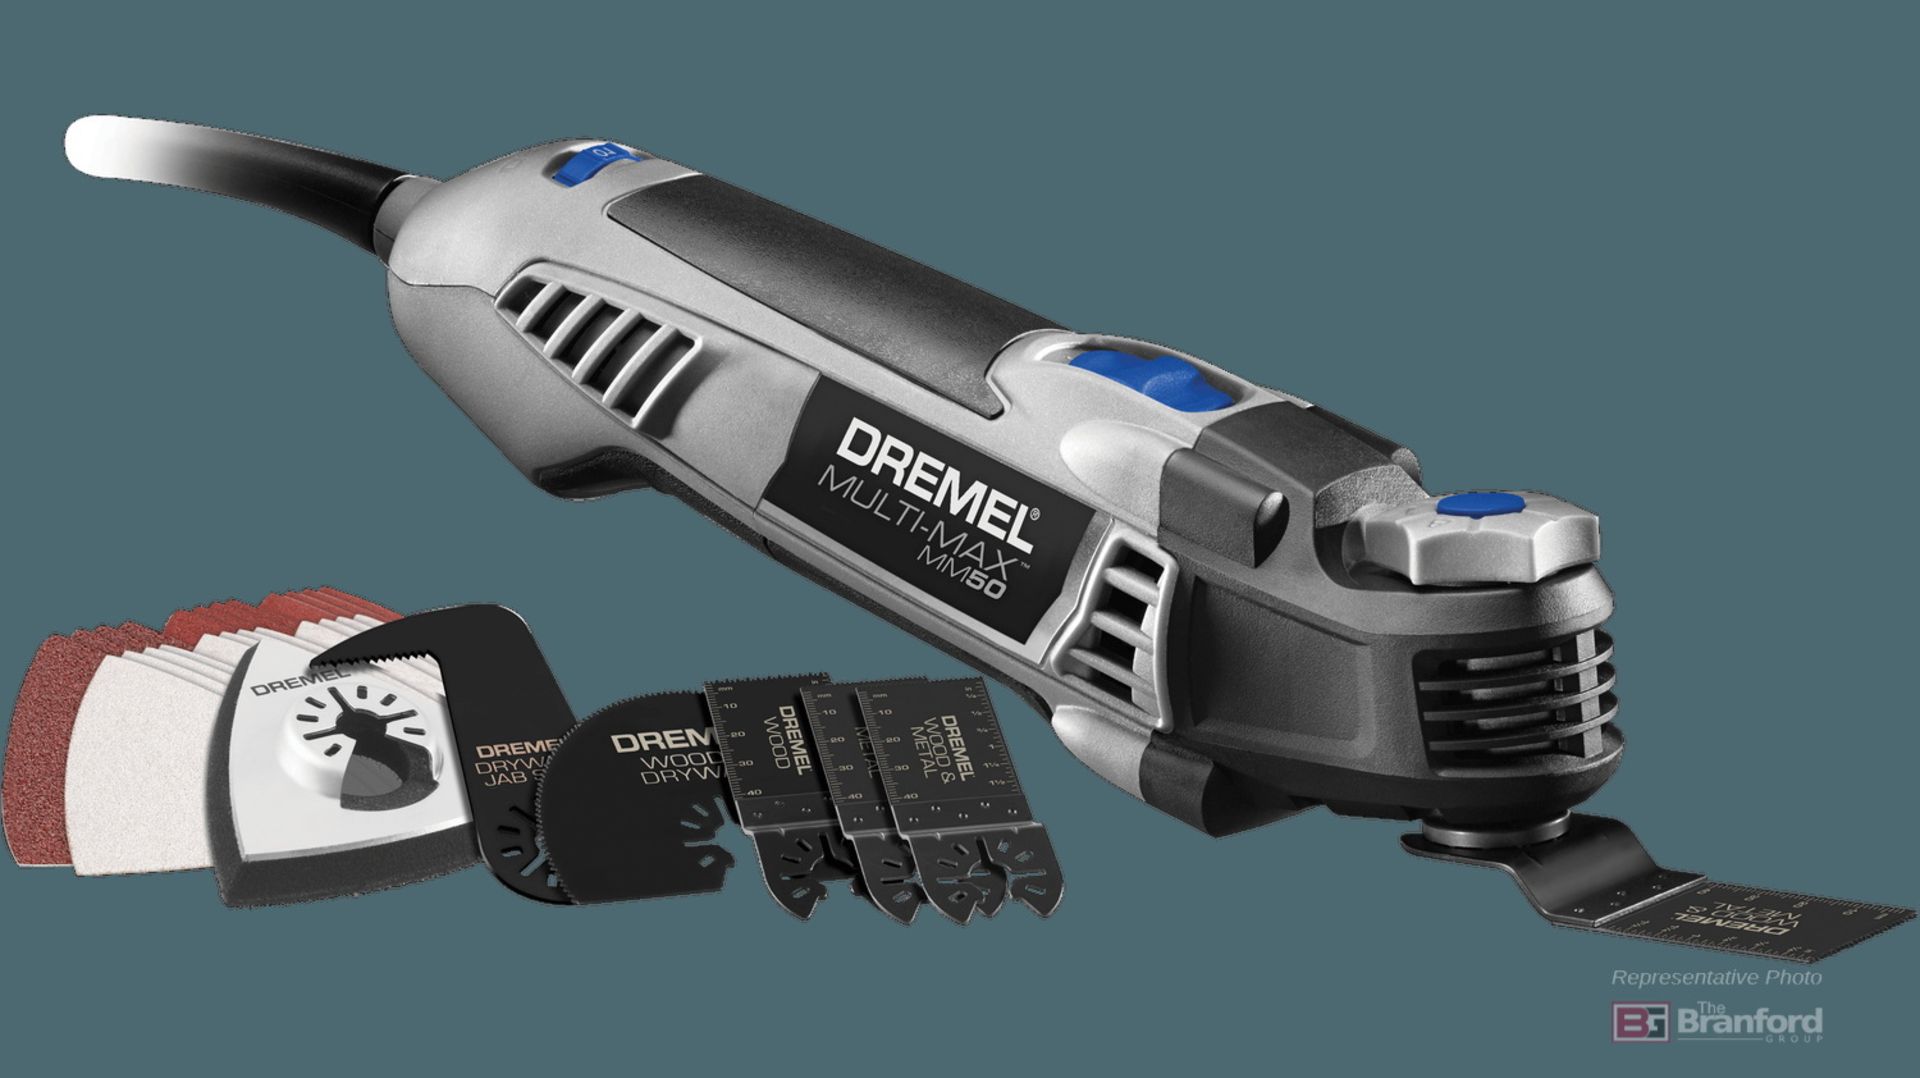 (2) Dremel MM50-DR-RT Multi-Max Oscillating Power Tools